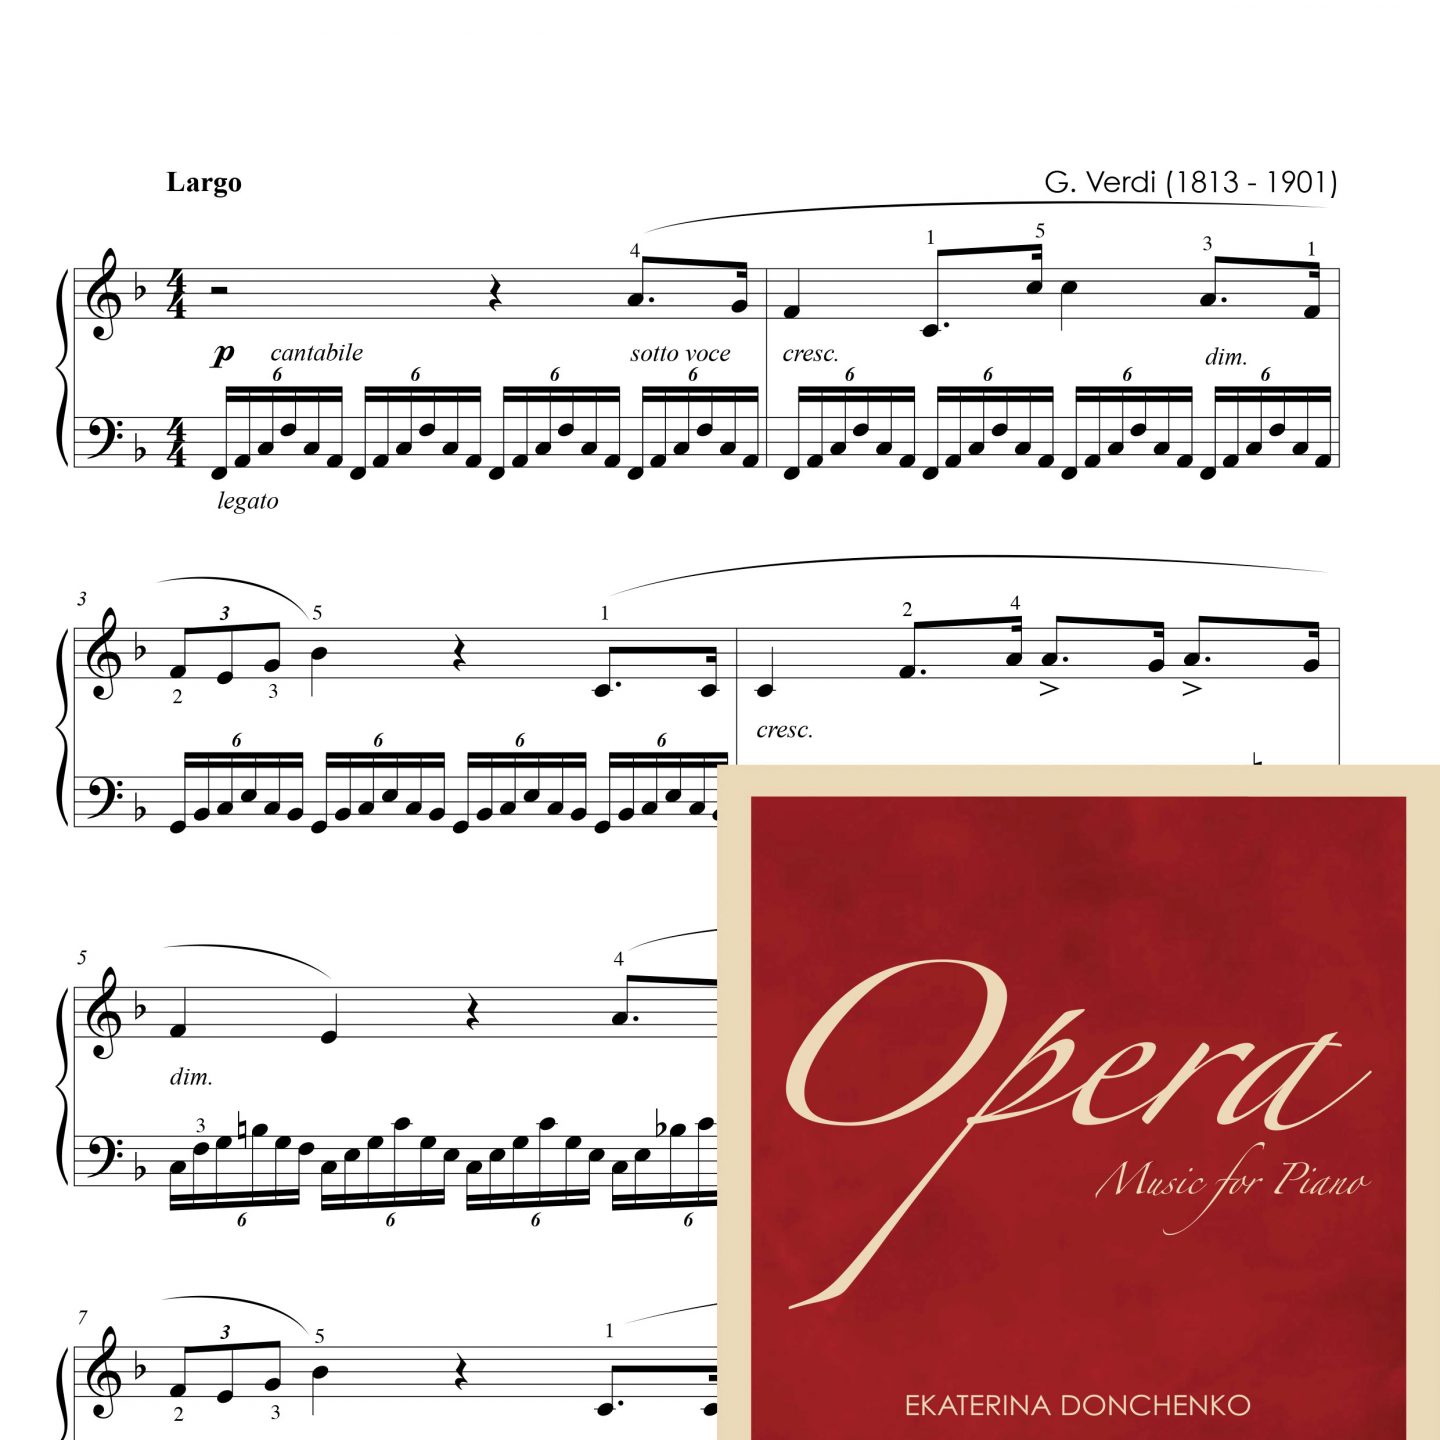 Verdi G. – VA, PENSIERO – Nabucco (para piano)